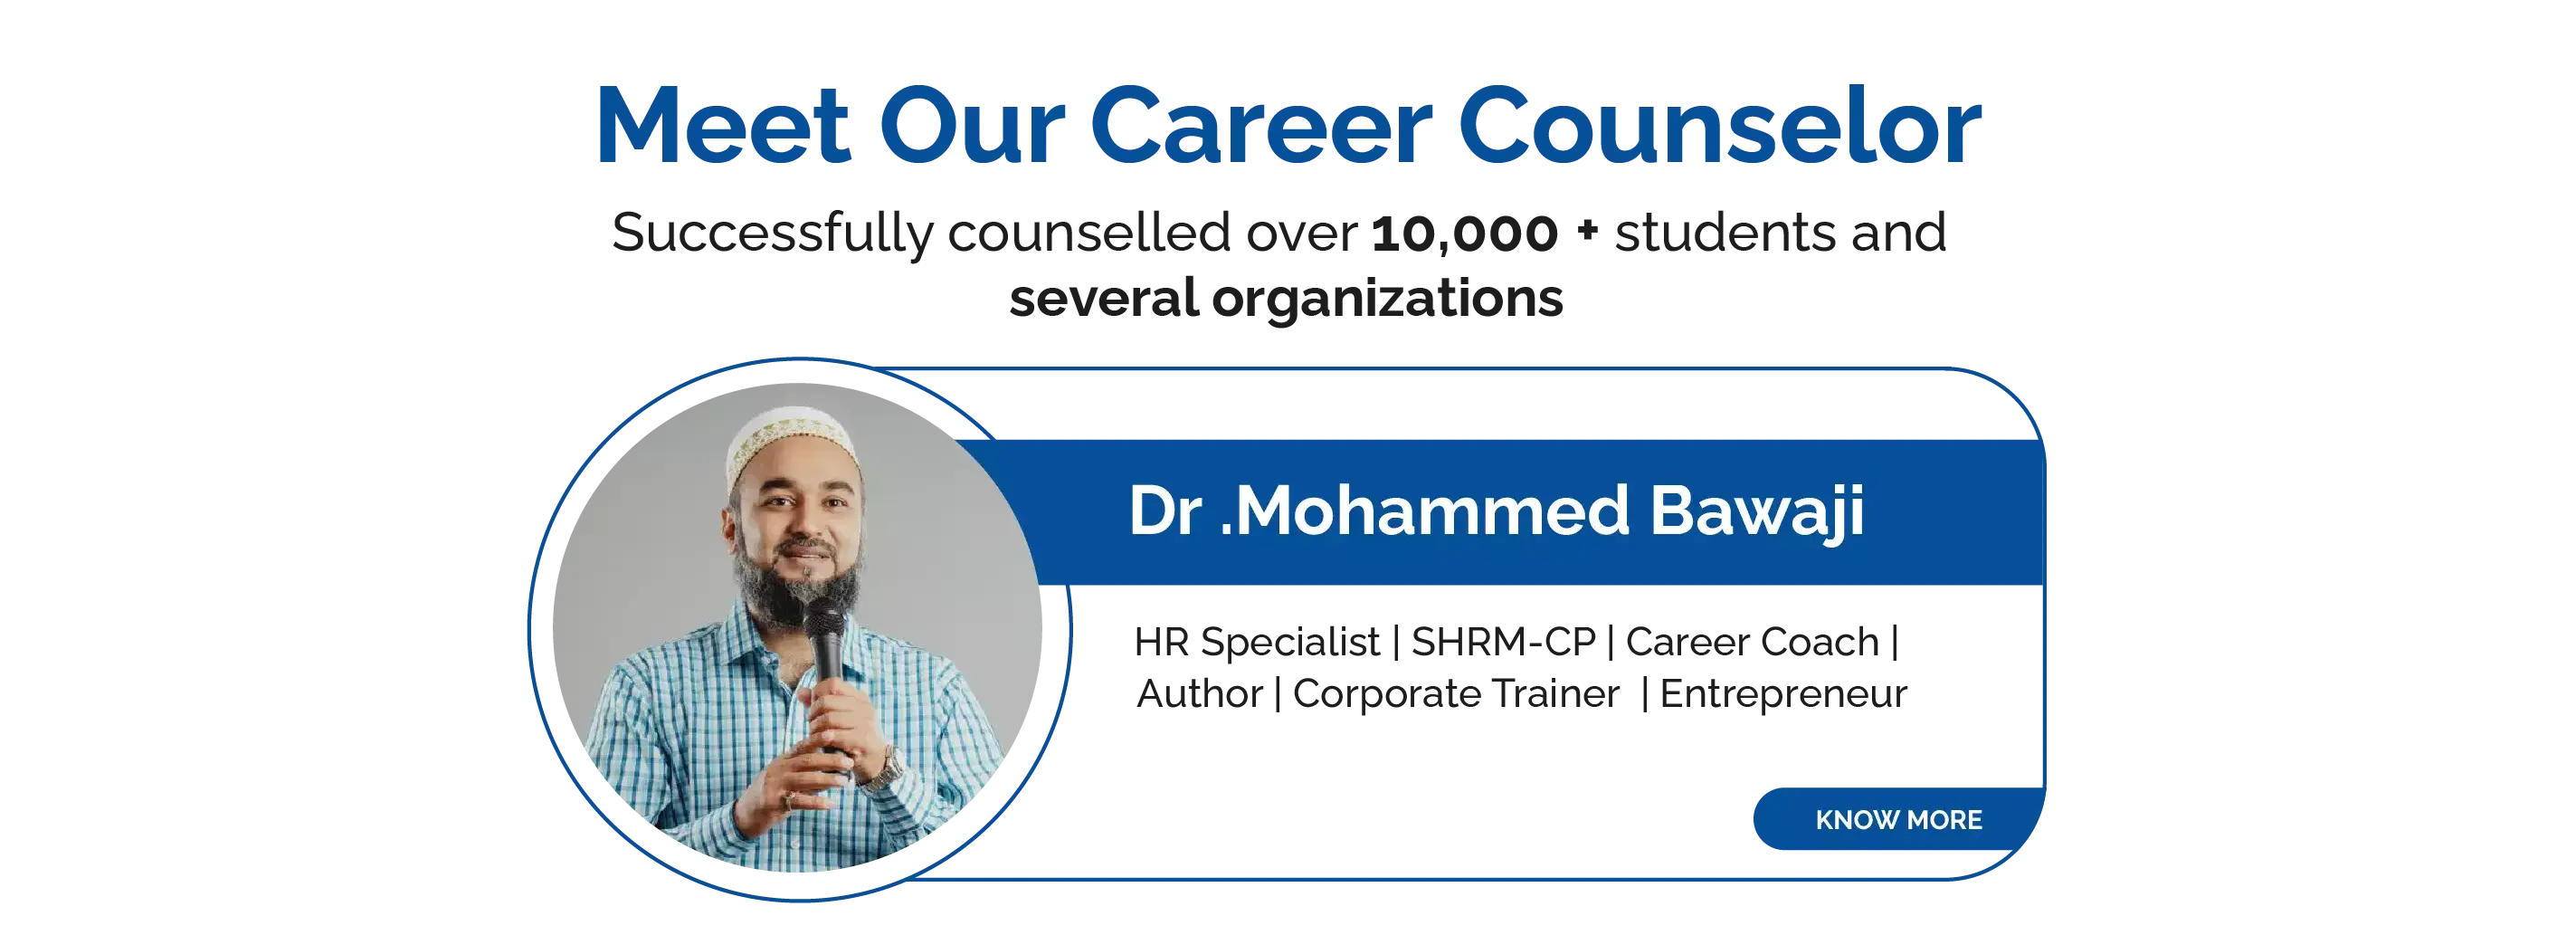 HR Specialist | SHRM-CP | Career Coach | Author | Corporate Trainer | Entrepreneur